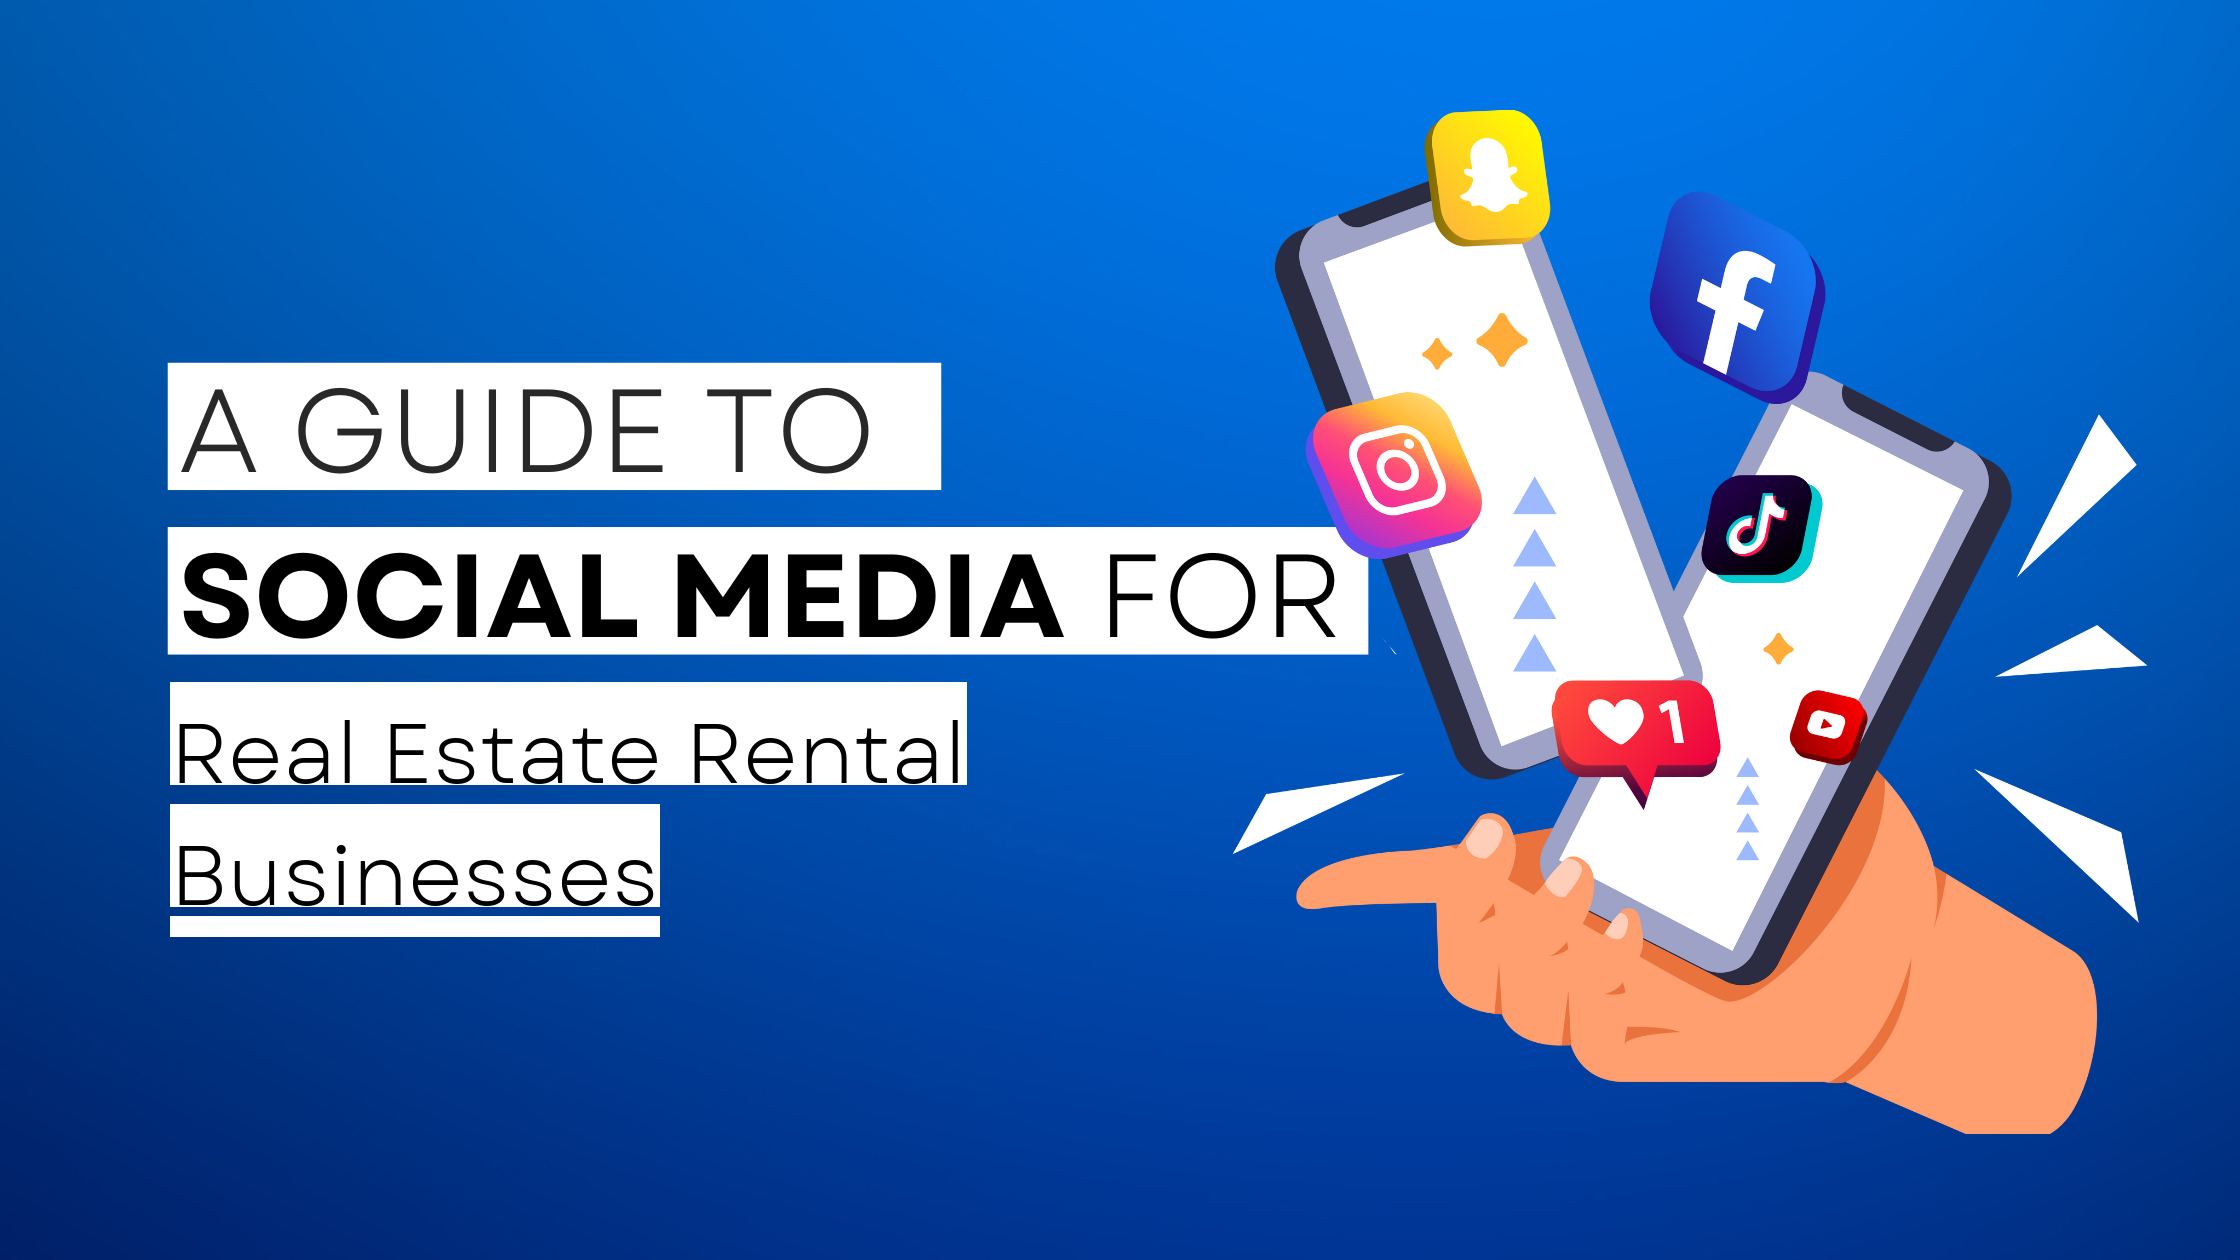 How to start Real Estate Rental on social media